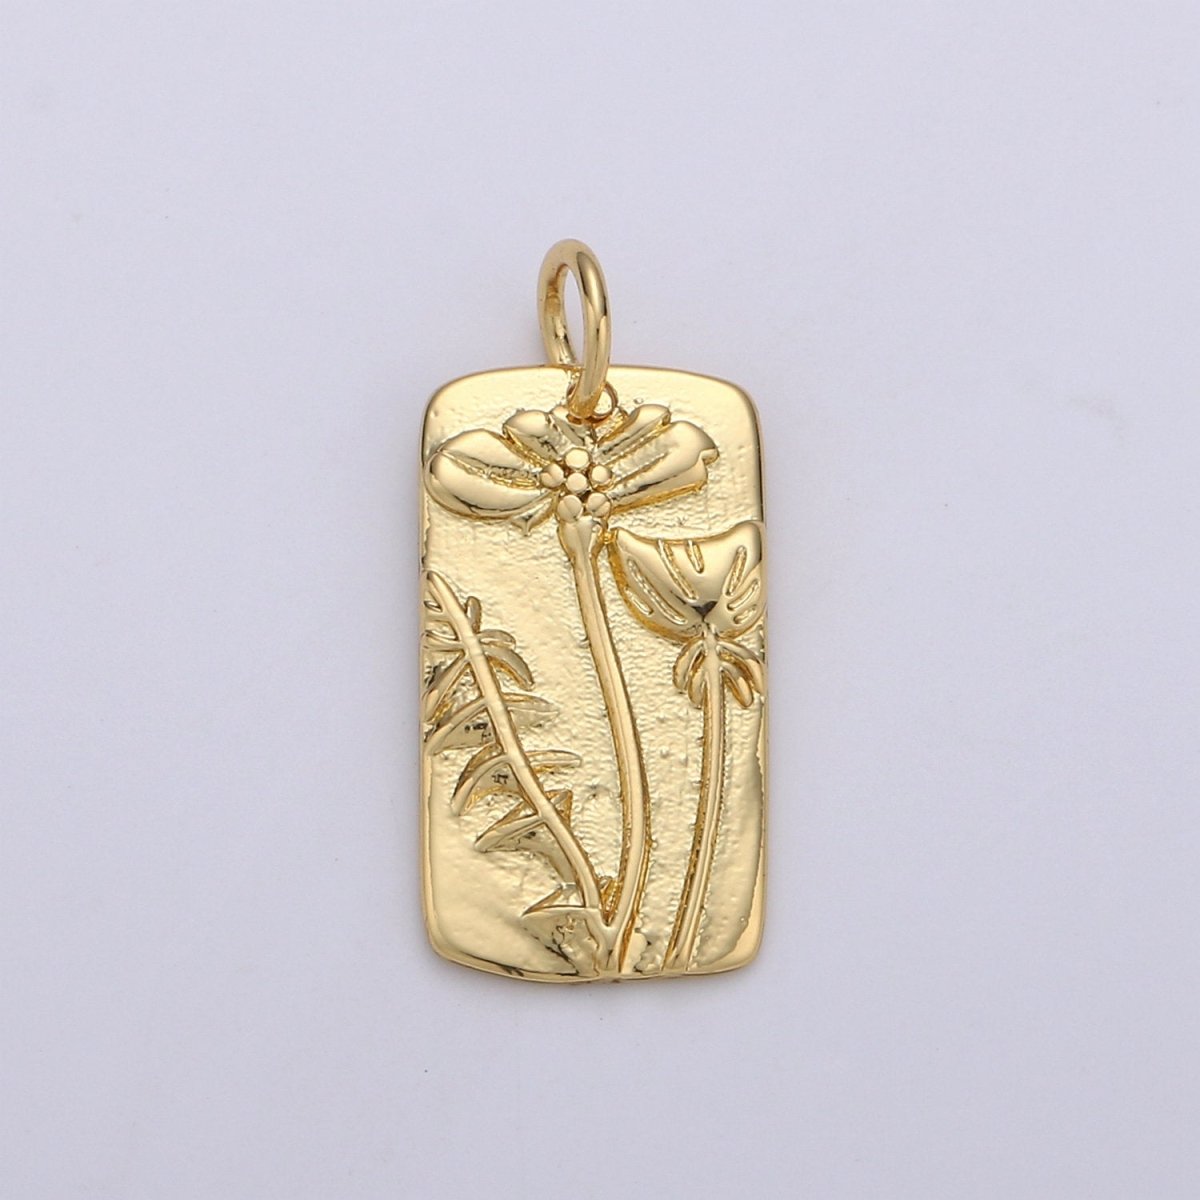 Dandelion Charms, Gold Dandelion Pendant, or Dainty Dandelion Charm, Small Dandelion Charm for Necklace Floral Flower Jewelry D-624 - DLUXCA